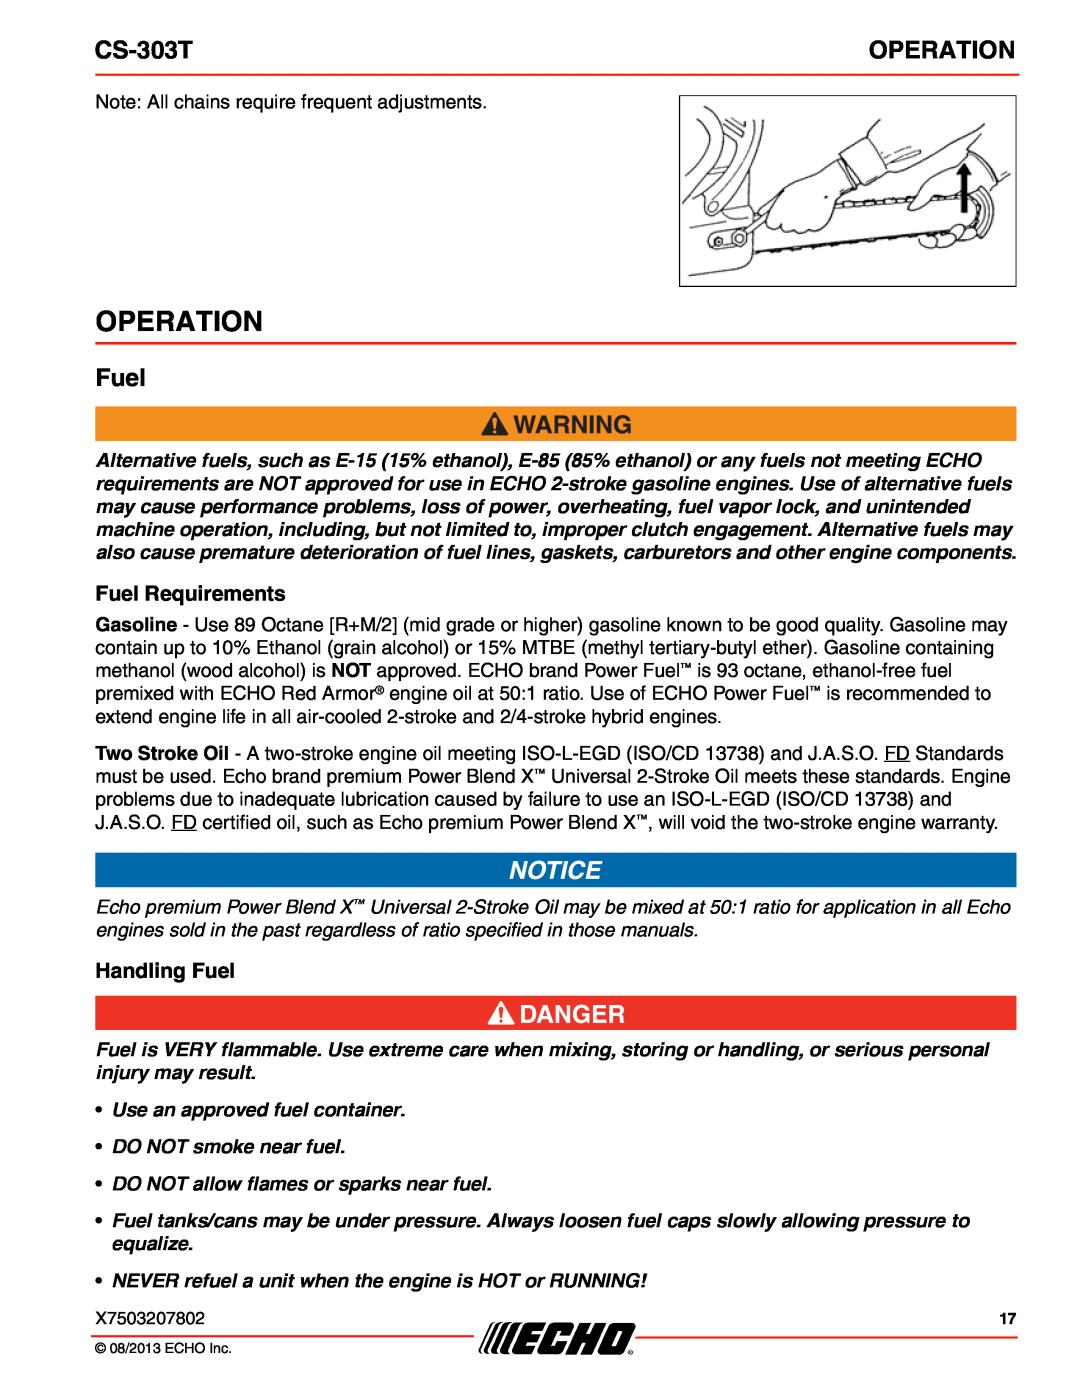 Echo CS-303T instruction manual Operation, Fuel Requirements, Handling Fuel 